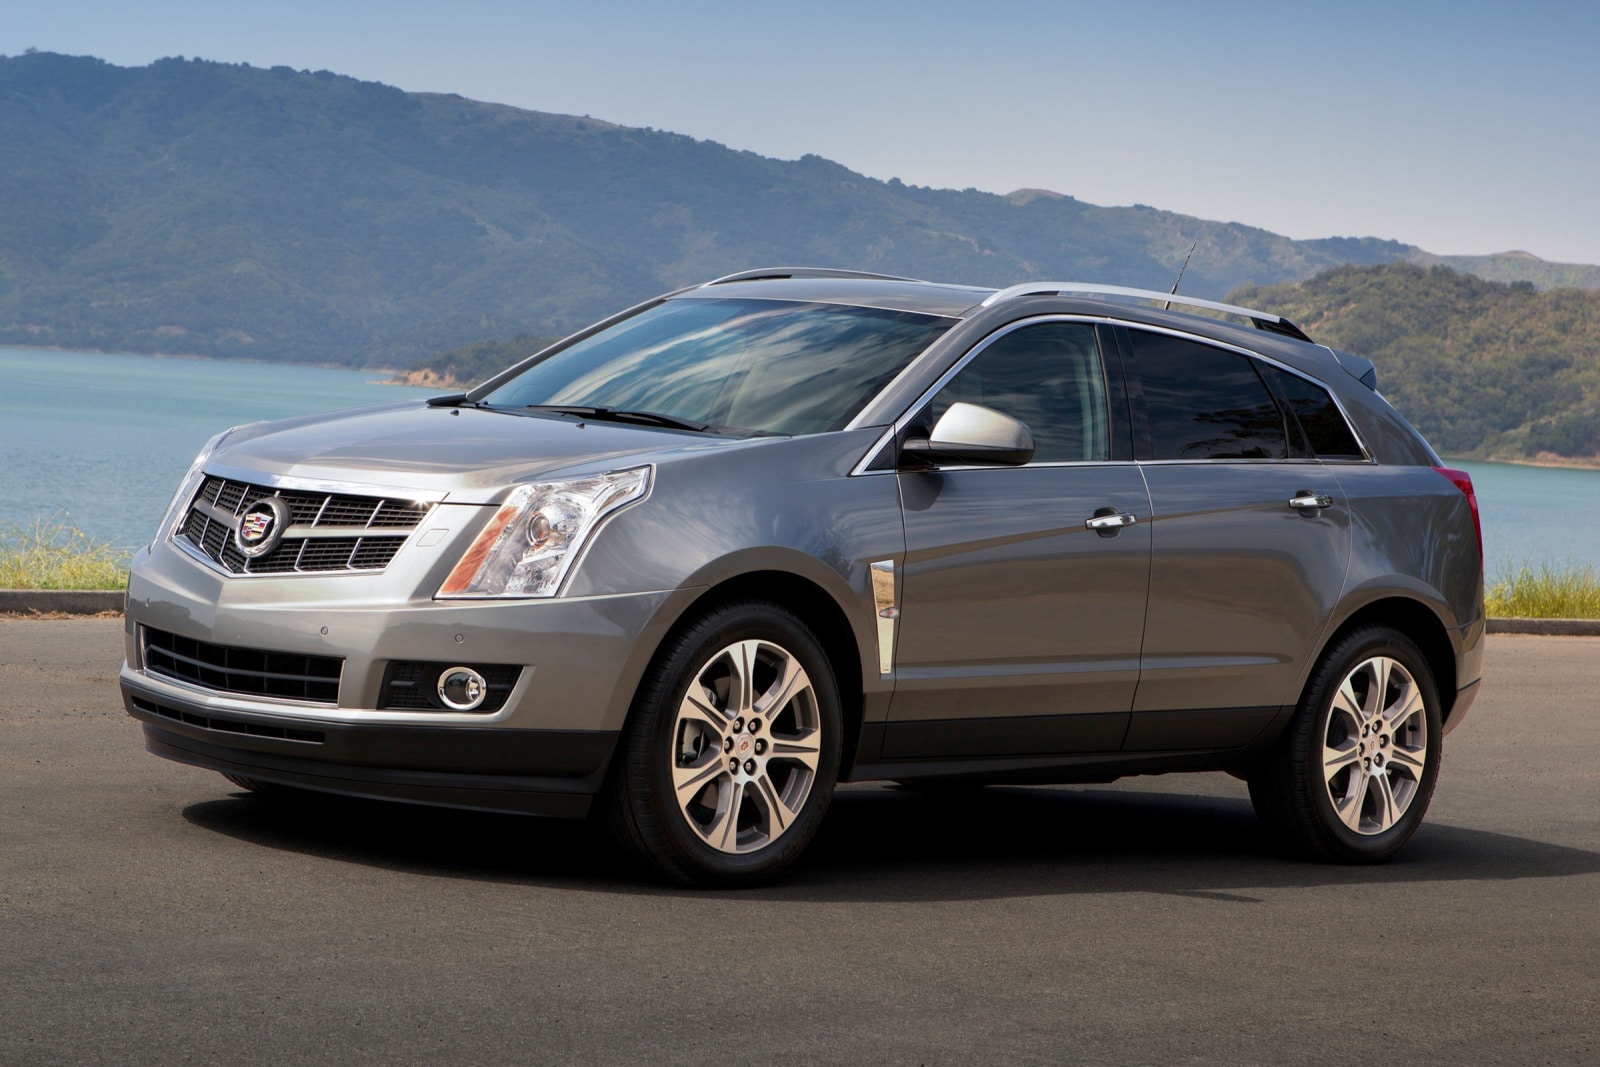 2012 Cadillac SRX Review & Ratings | Edmunds